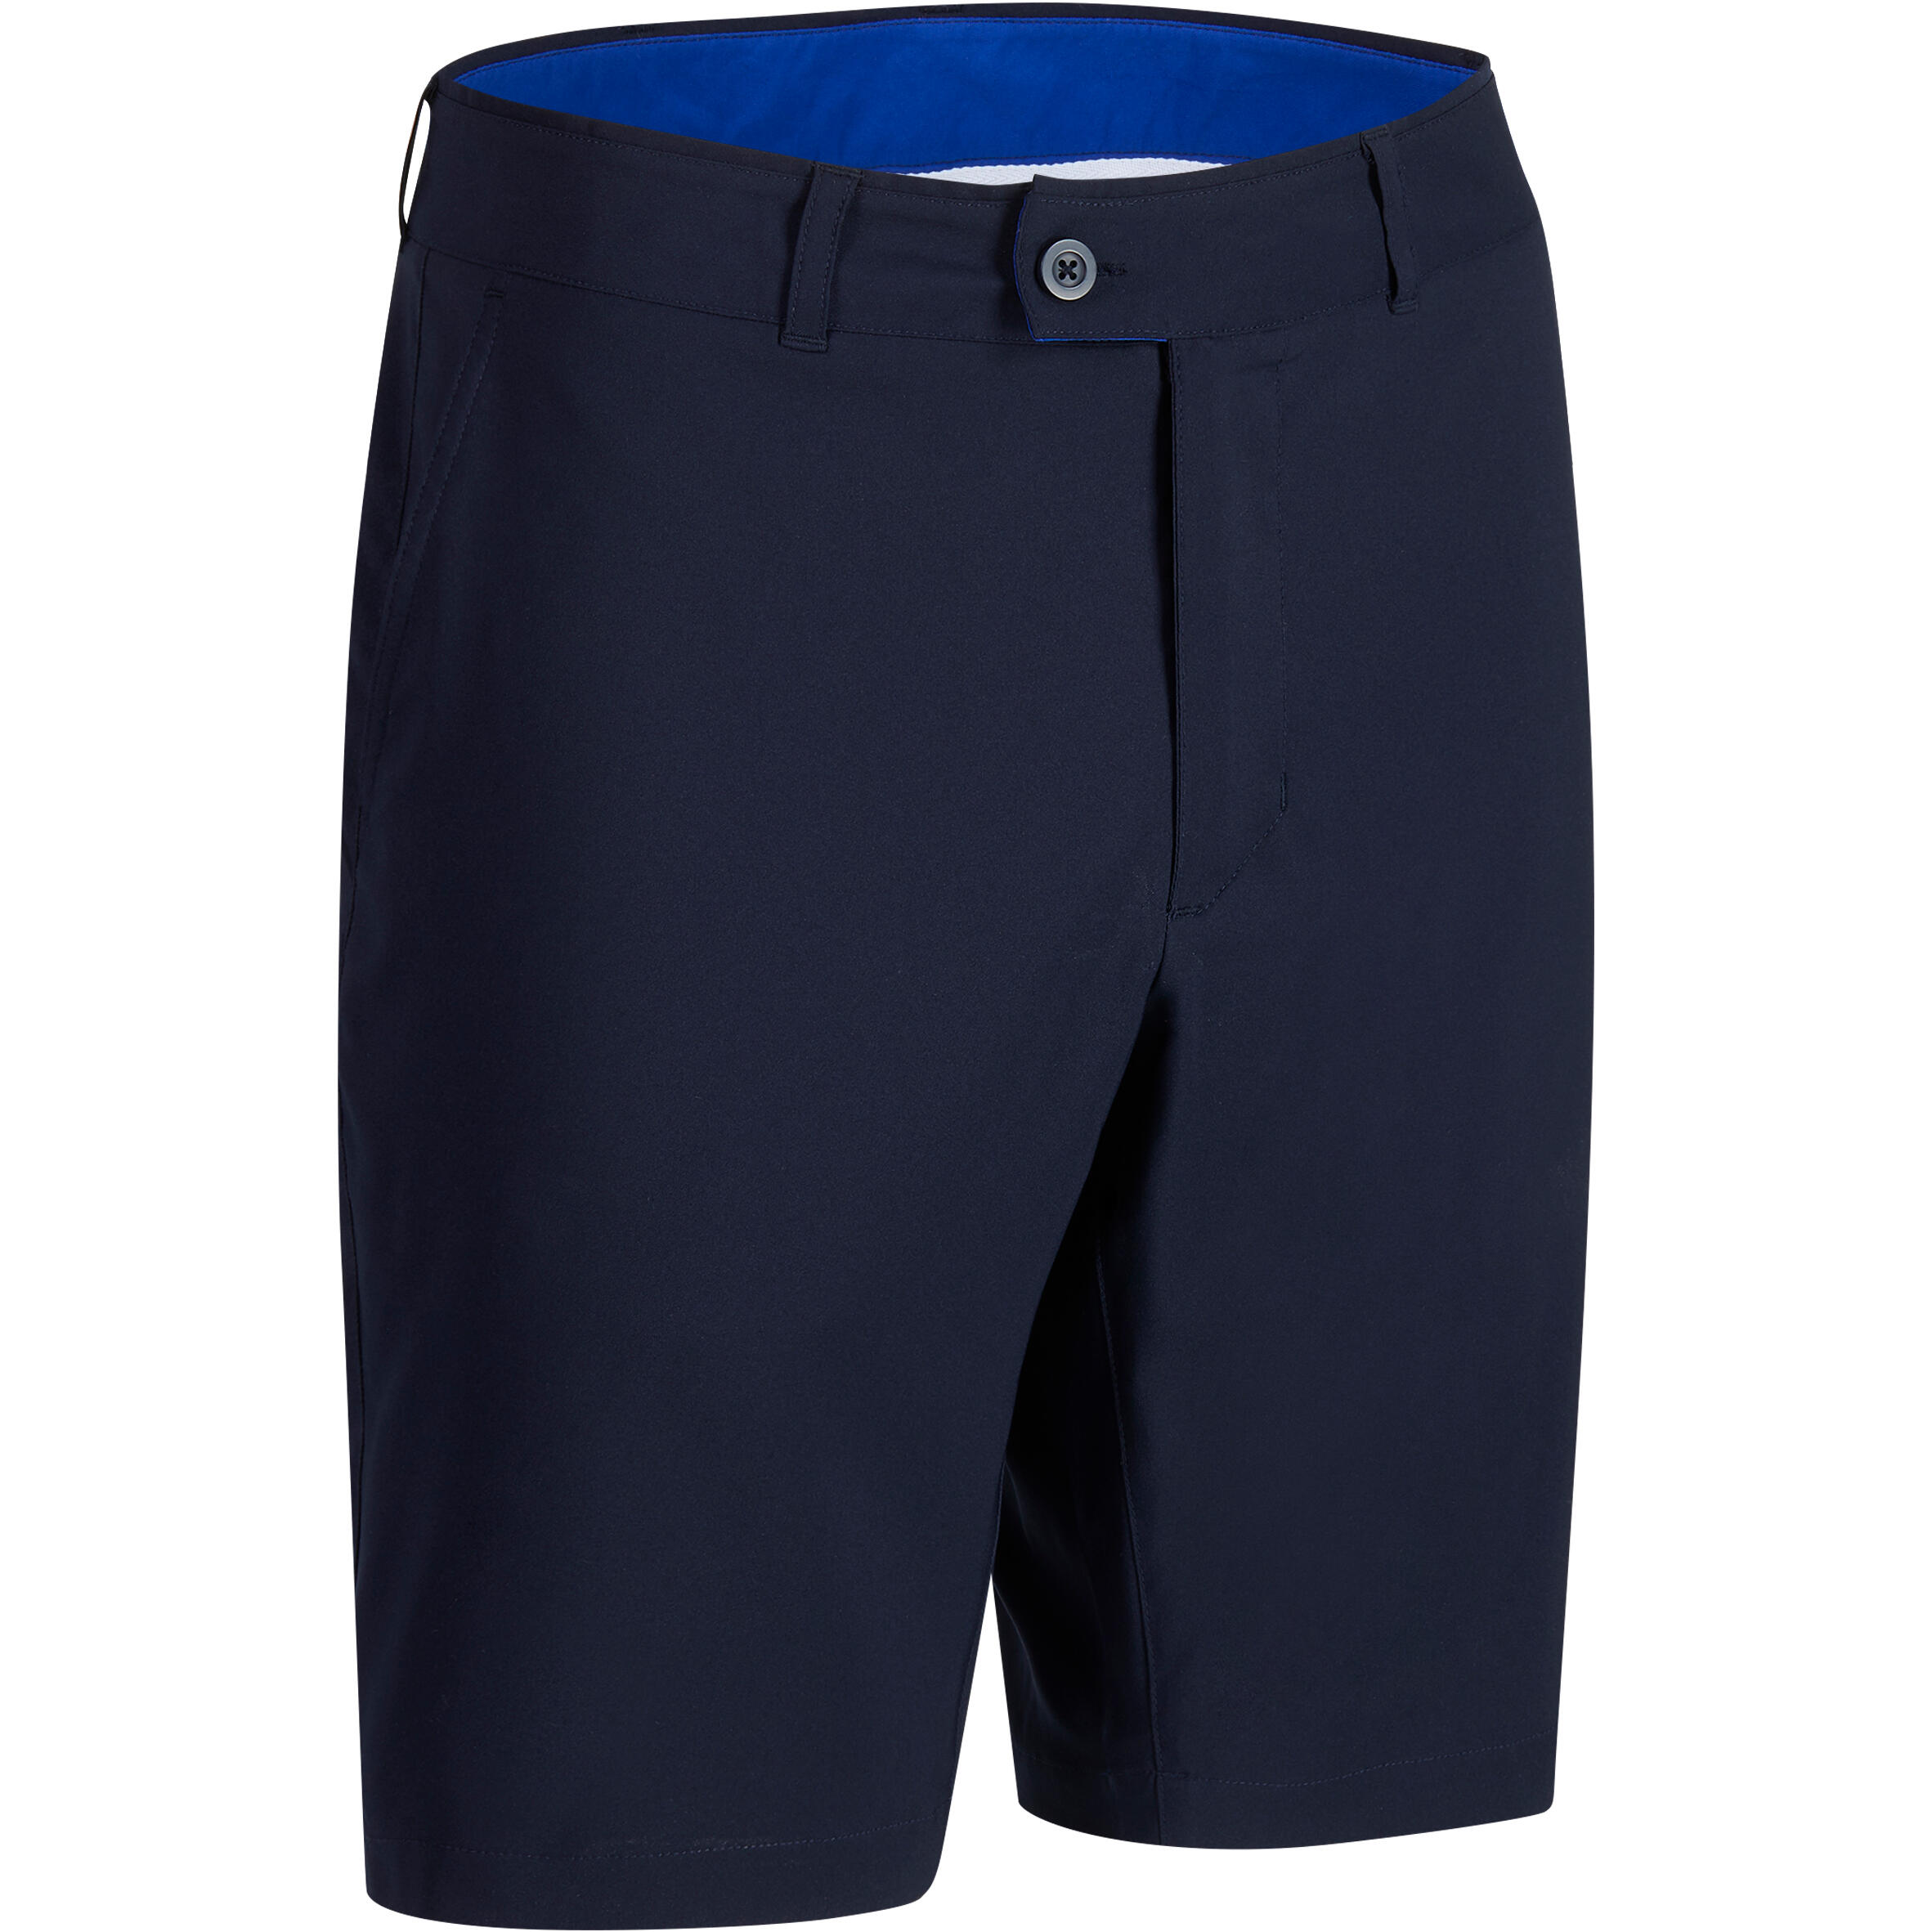 decathlon golf shorts